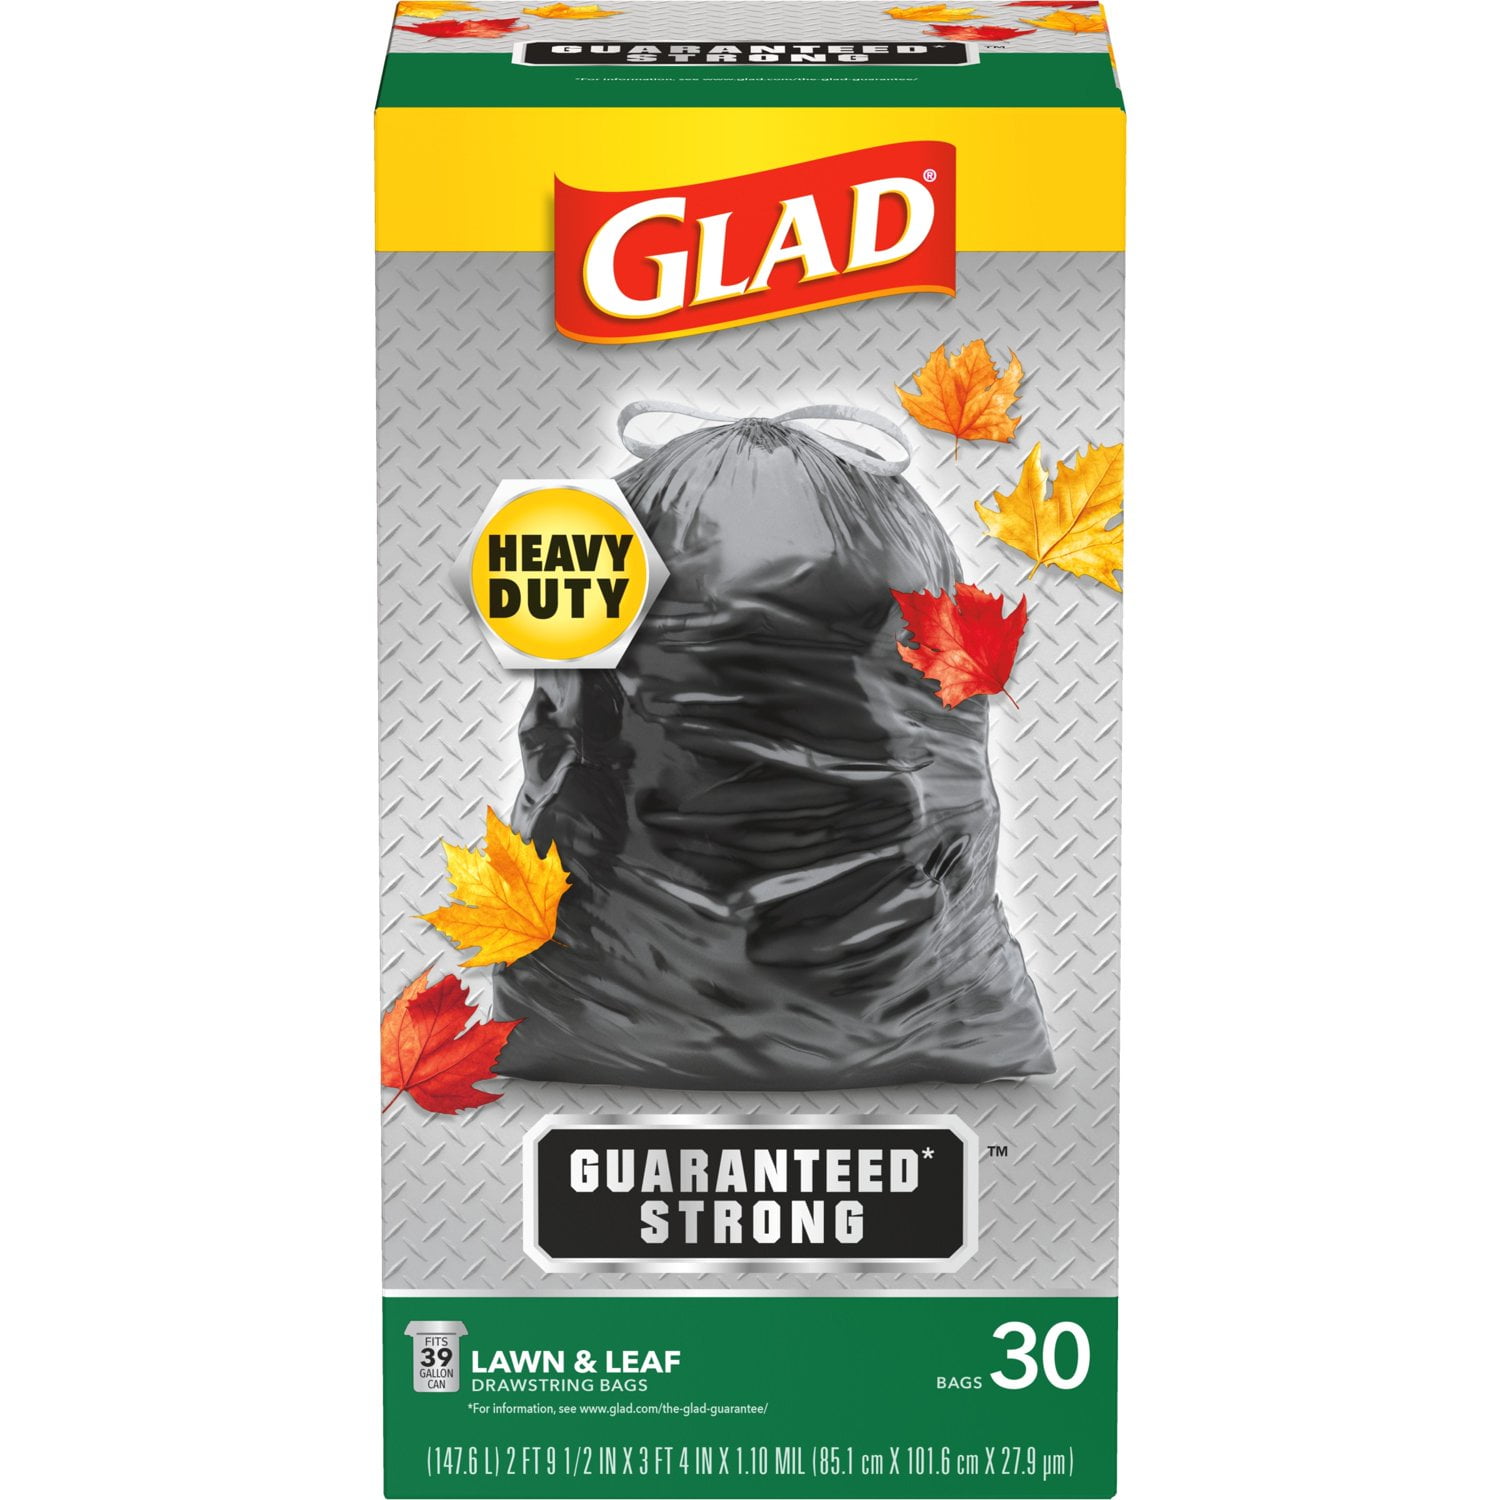 Basics Lawn & Leaf Drawstring Trash Bags, Unscented, 39 Gallon, 40  Count